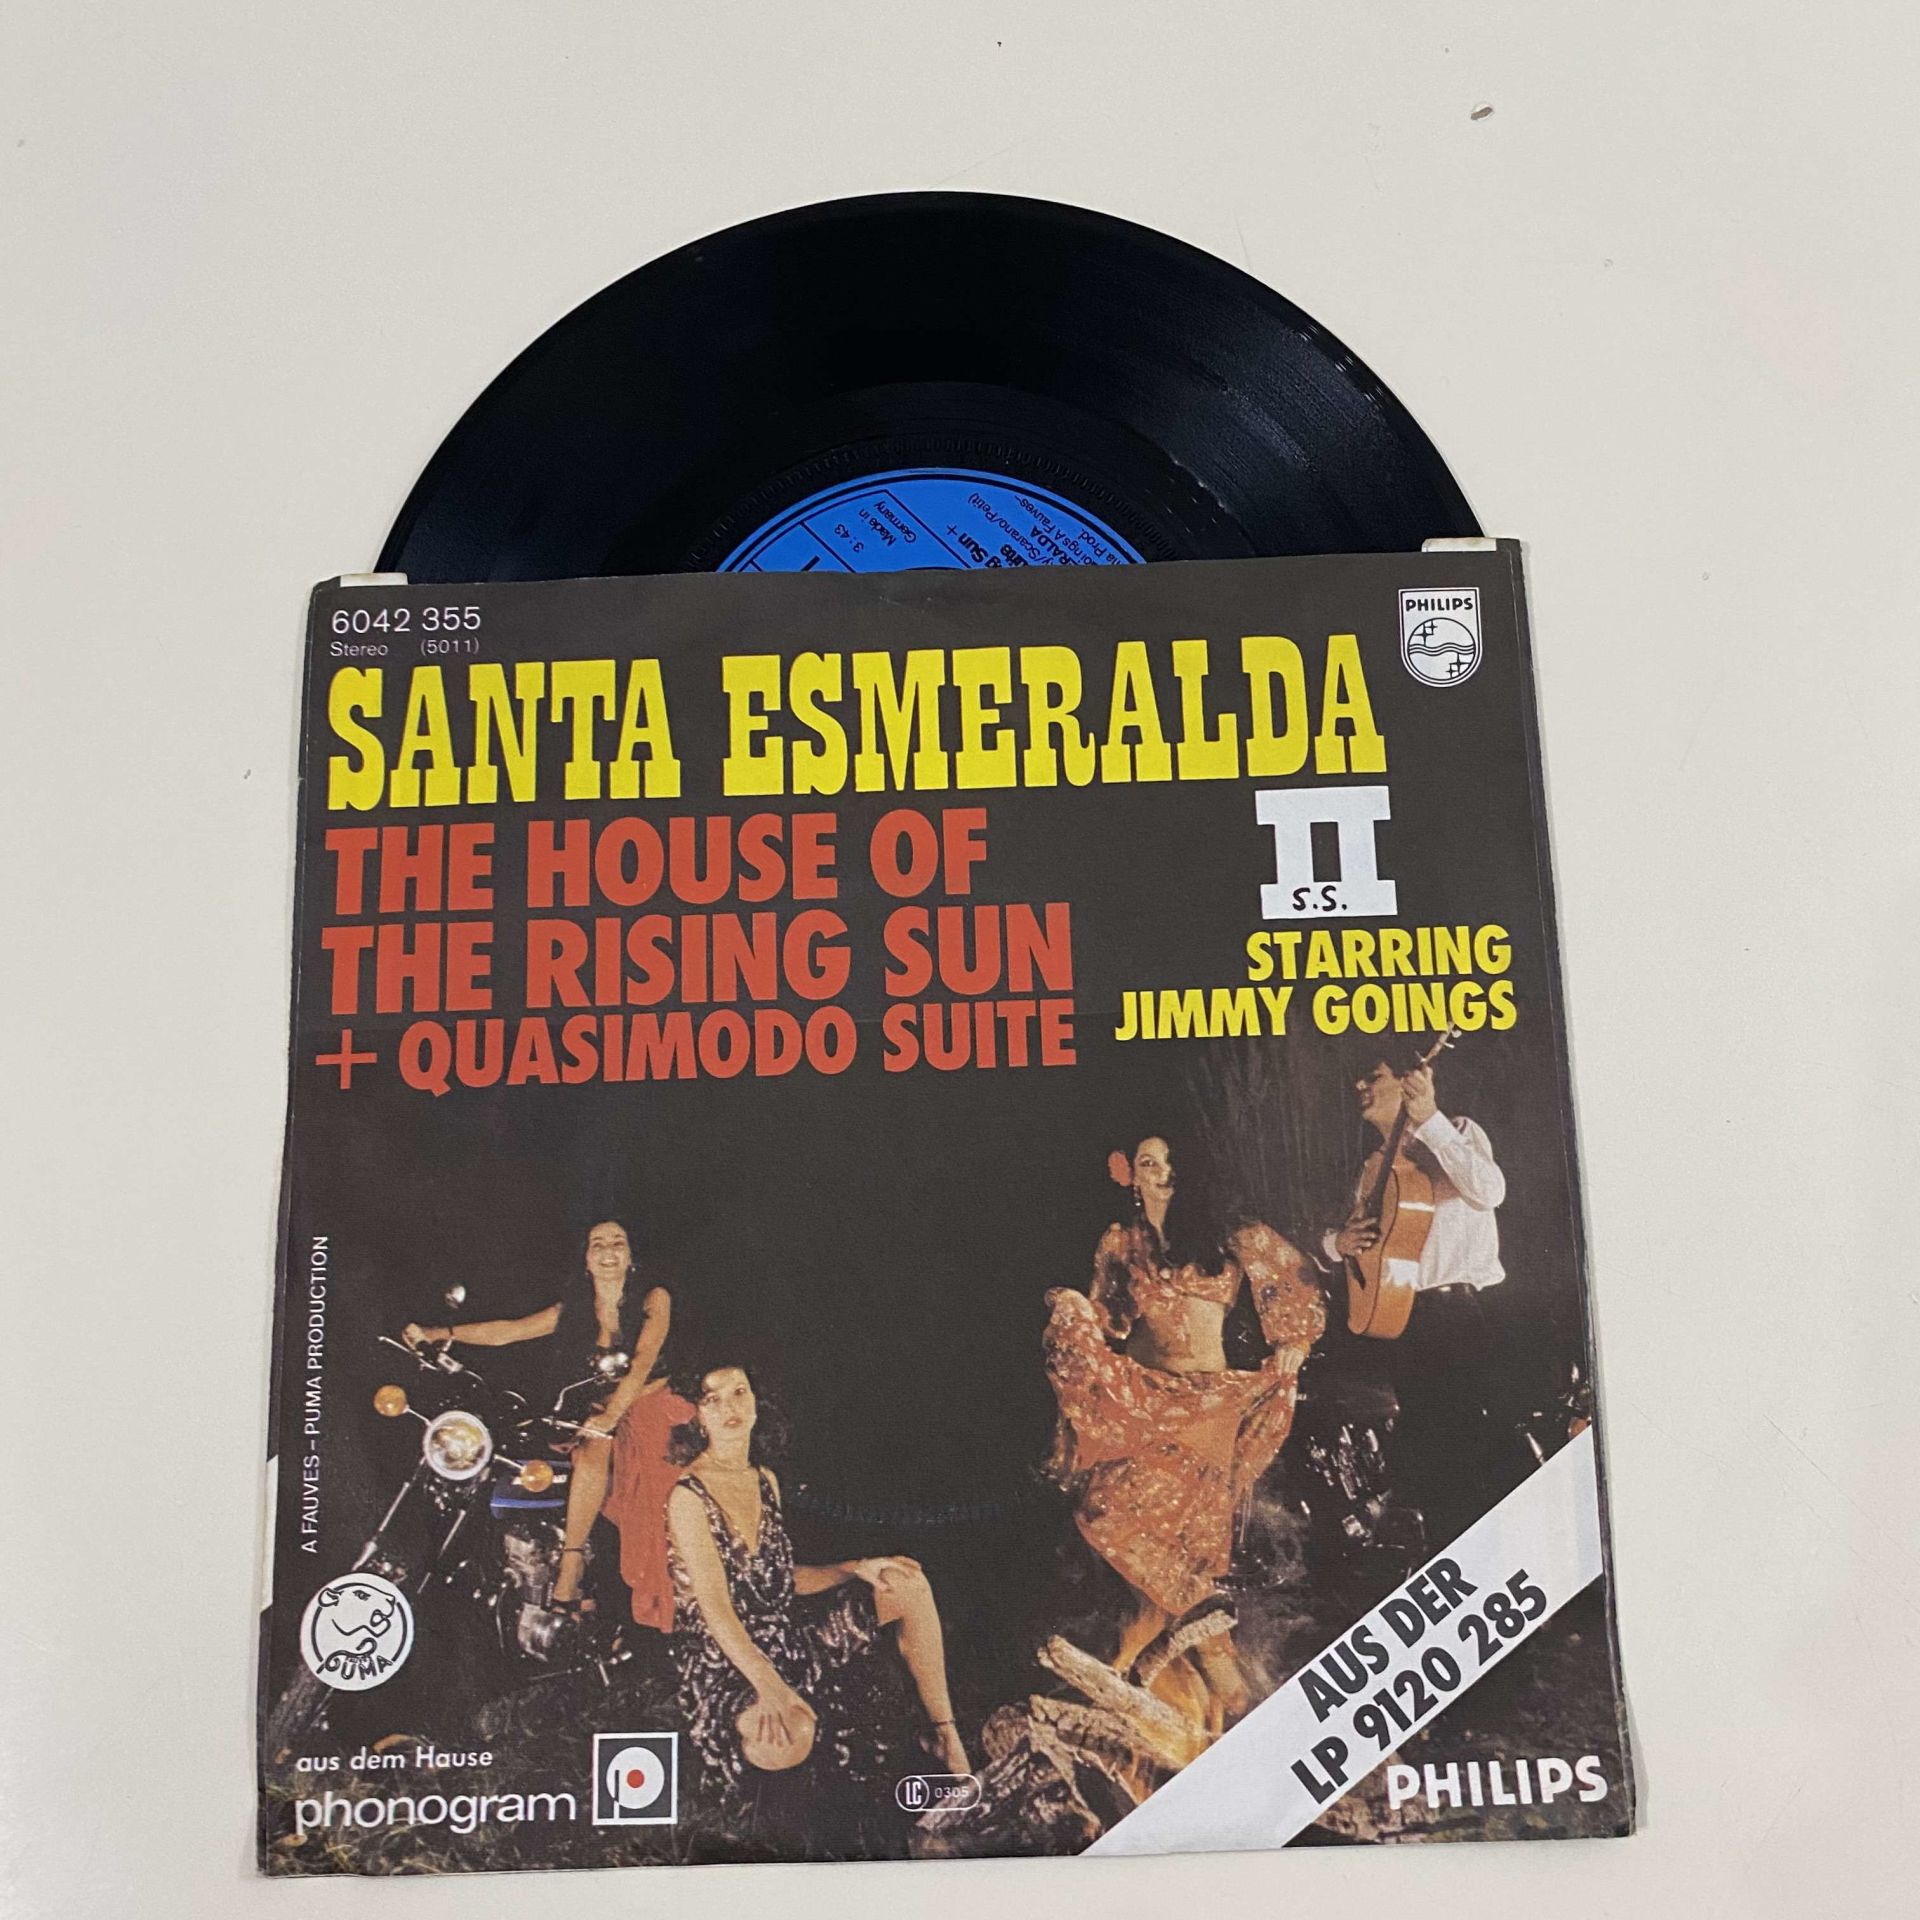 Santa Esmeralda Starring Jimmy Goings – The House Of The Rising Sun + Quasimodo Suite